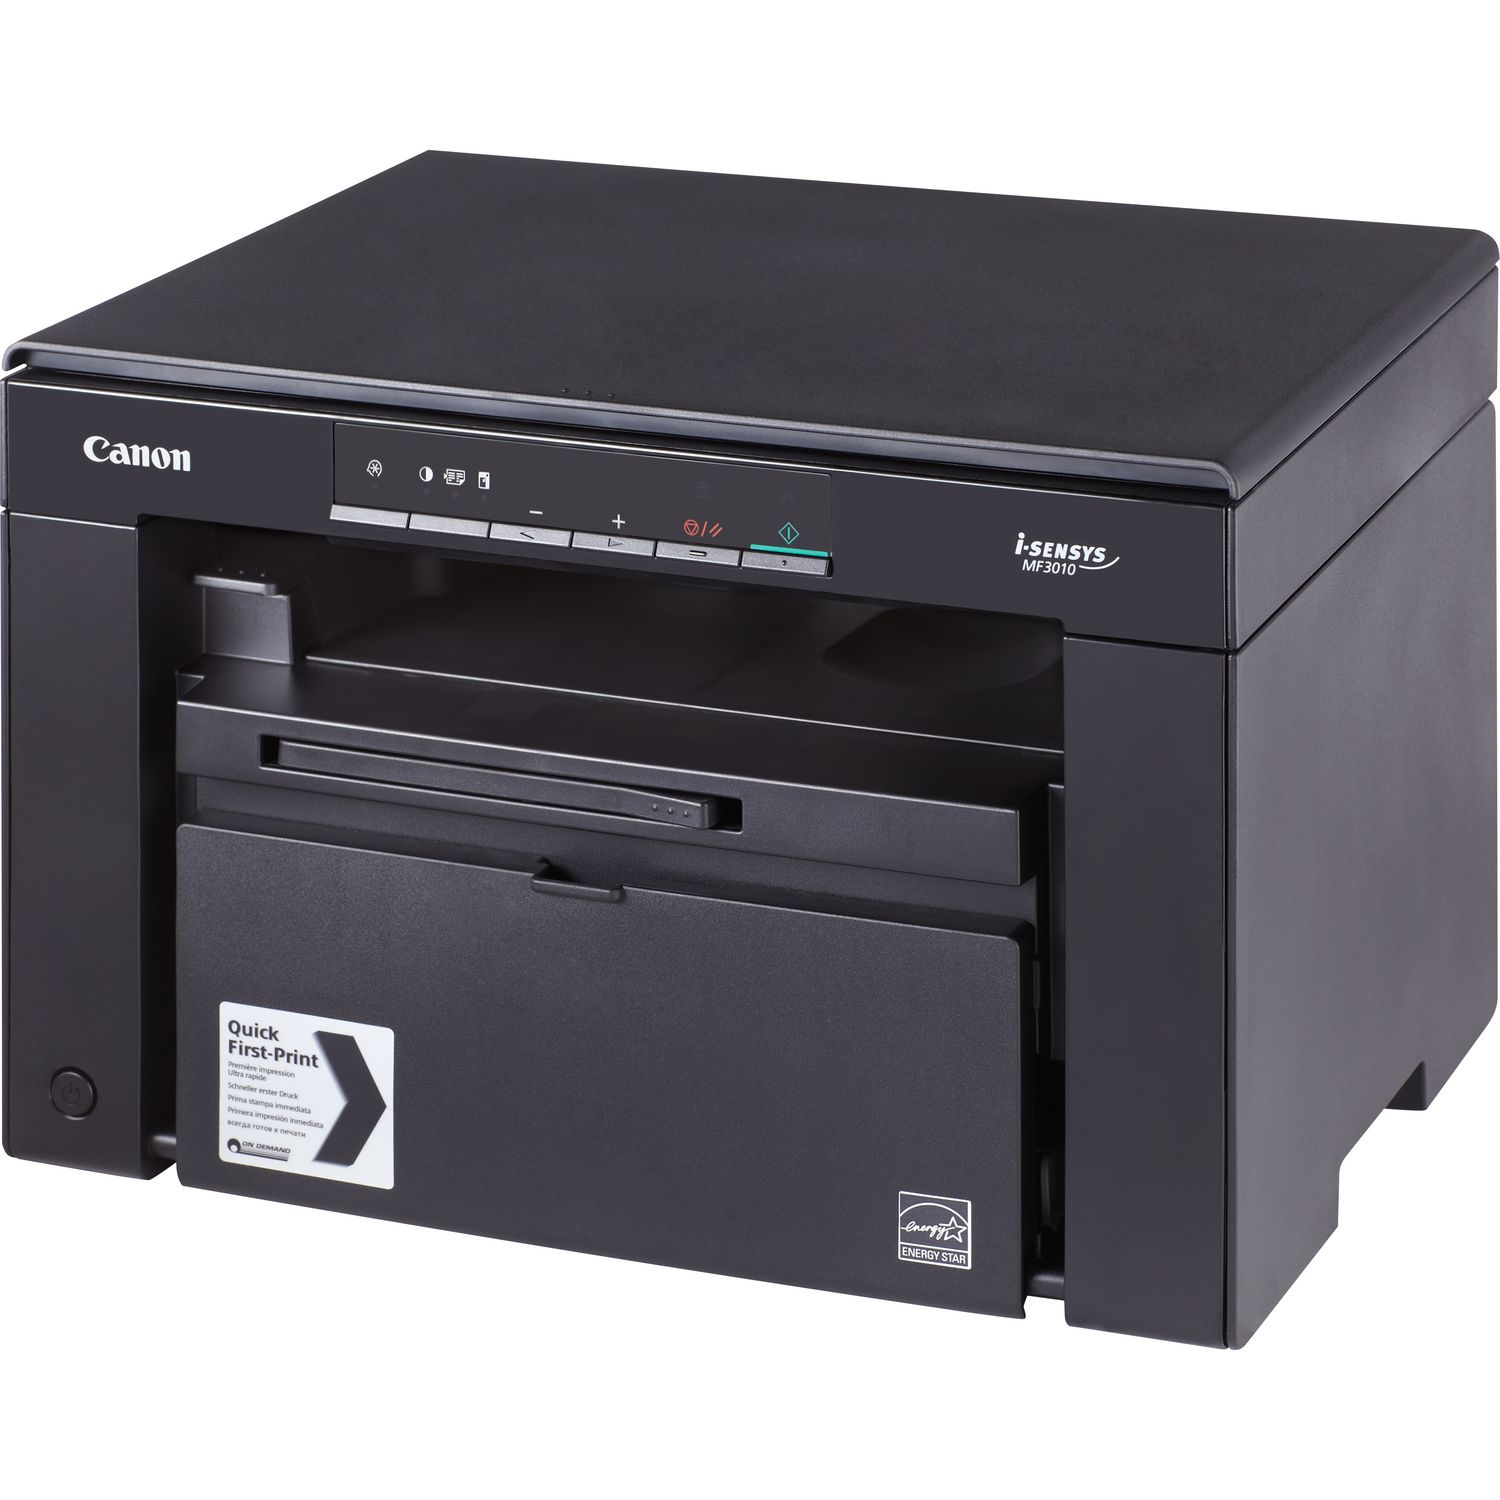 Canon i-SENSYS MF3010 Printer Copier Laser Printer Scanner All in One ...